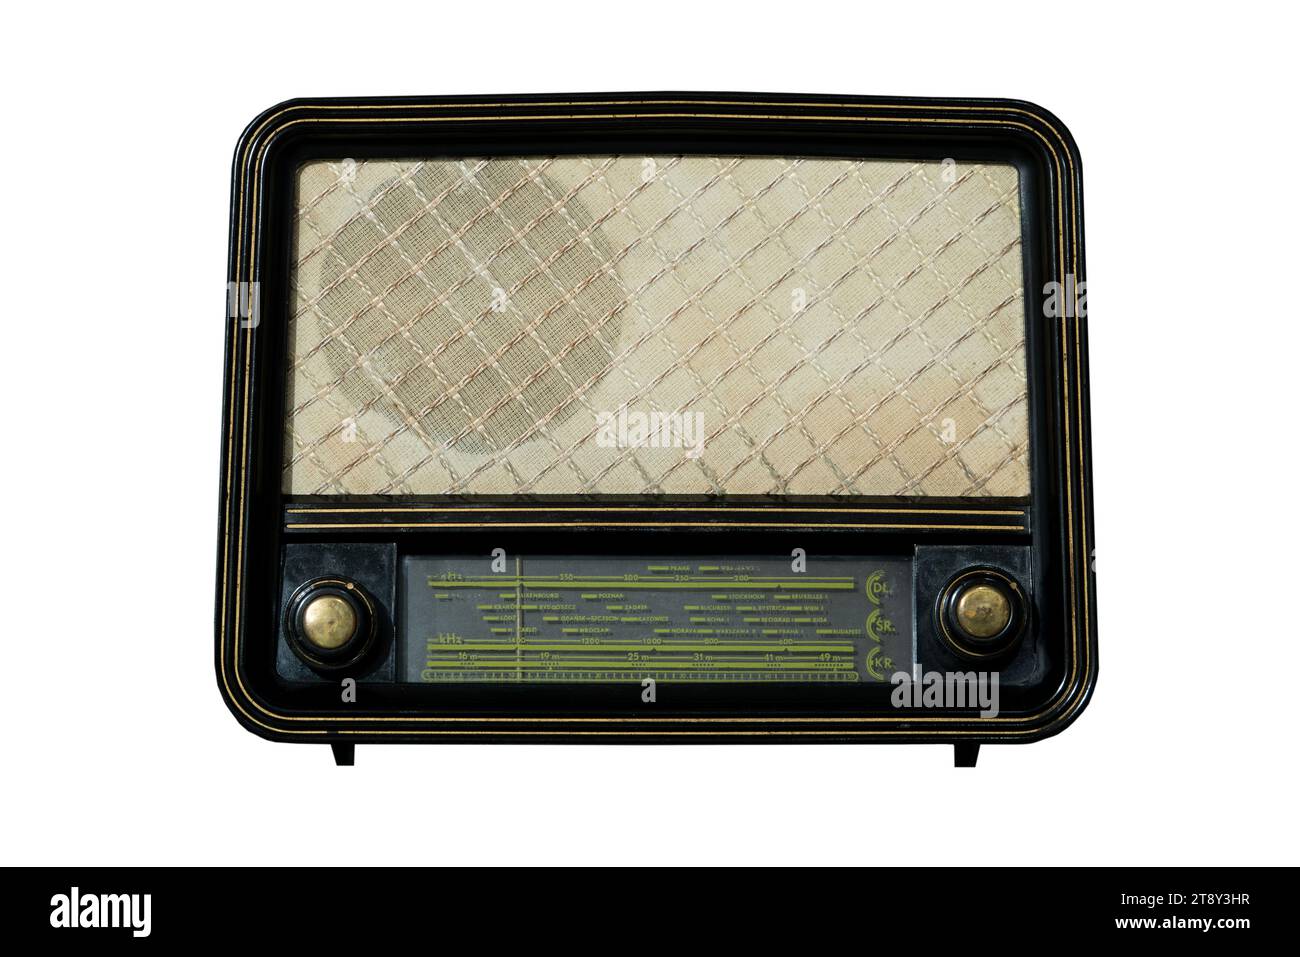 Radio transistor retro 160 + 189 radio pequeña Bluetooth